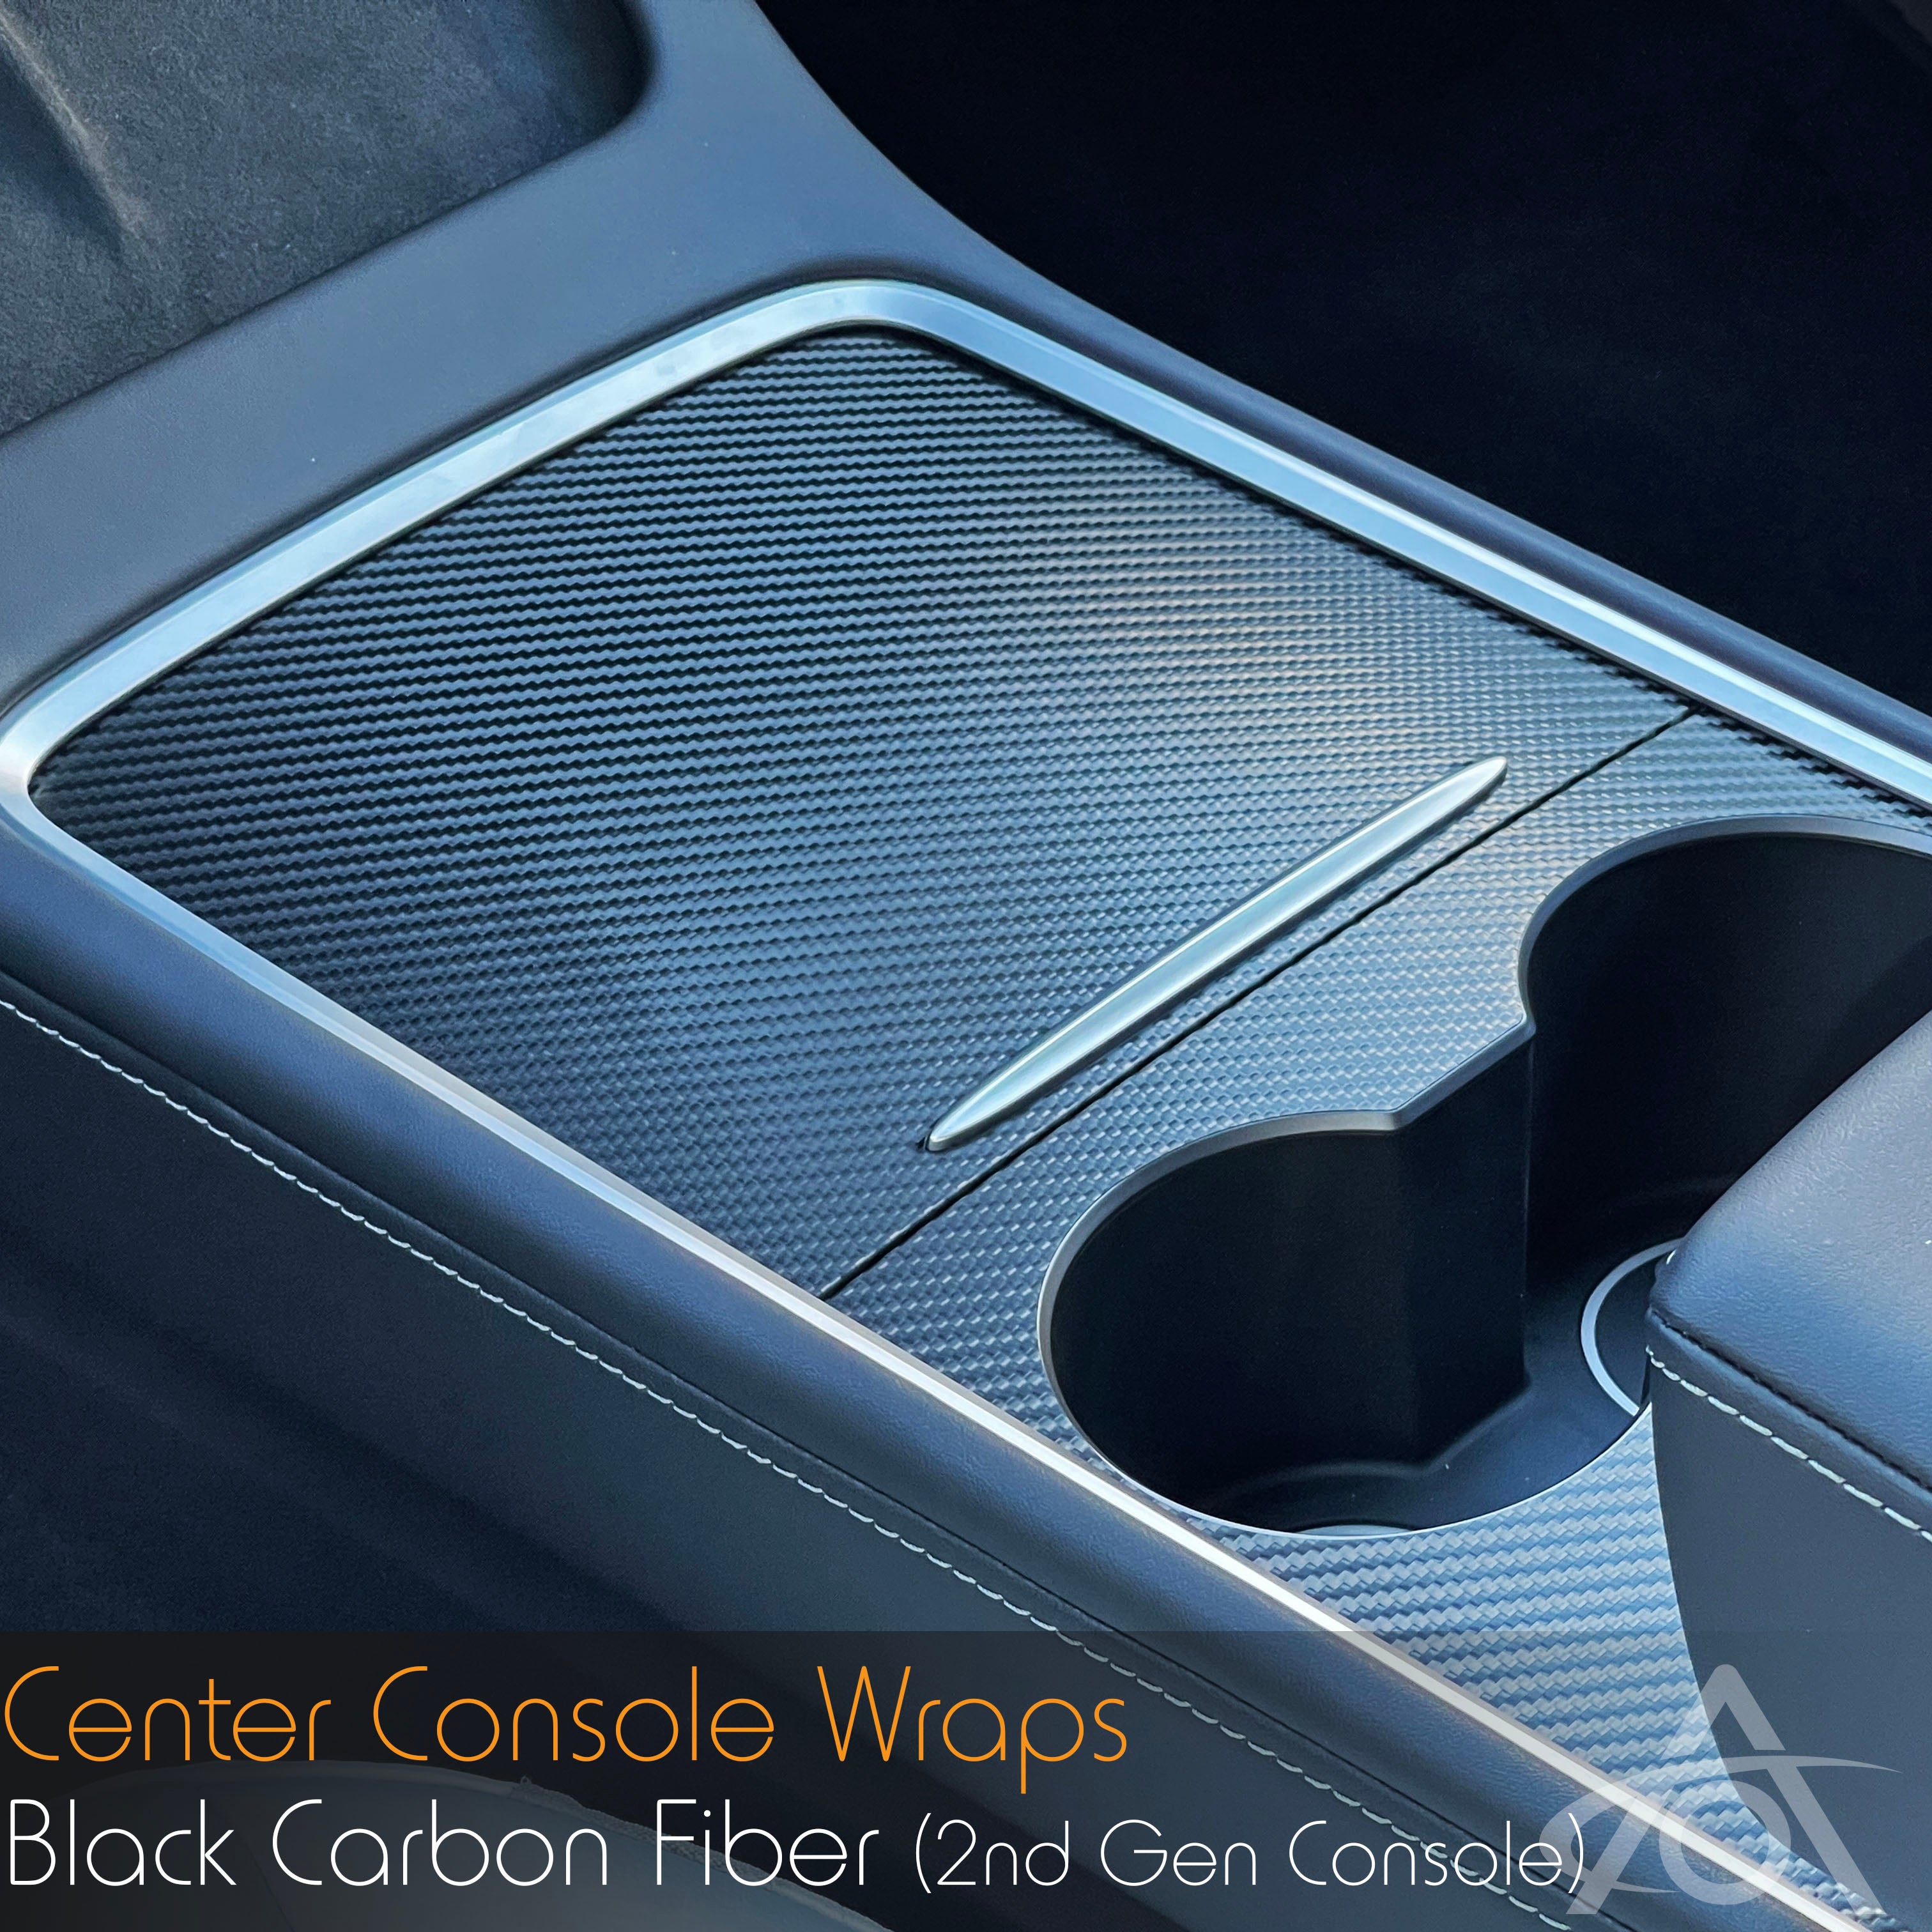 Tesla Center Console Wrap (second generation console)